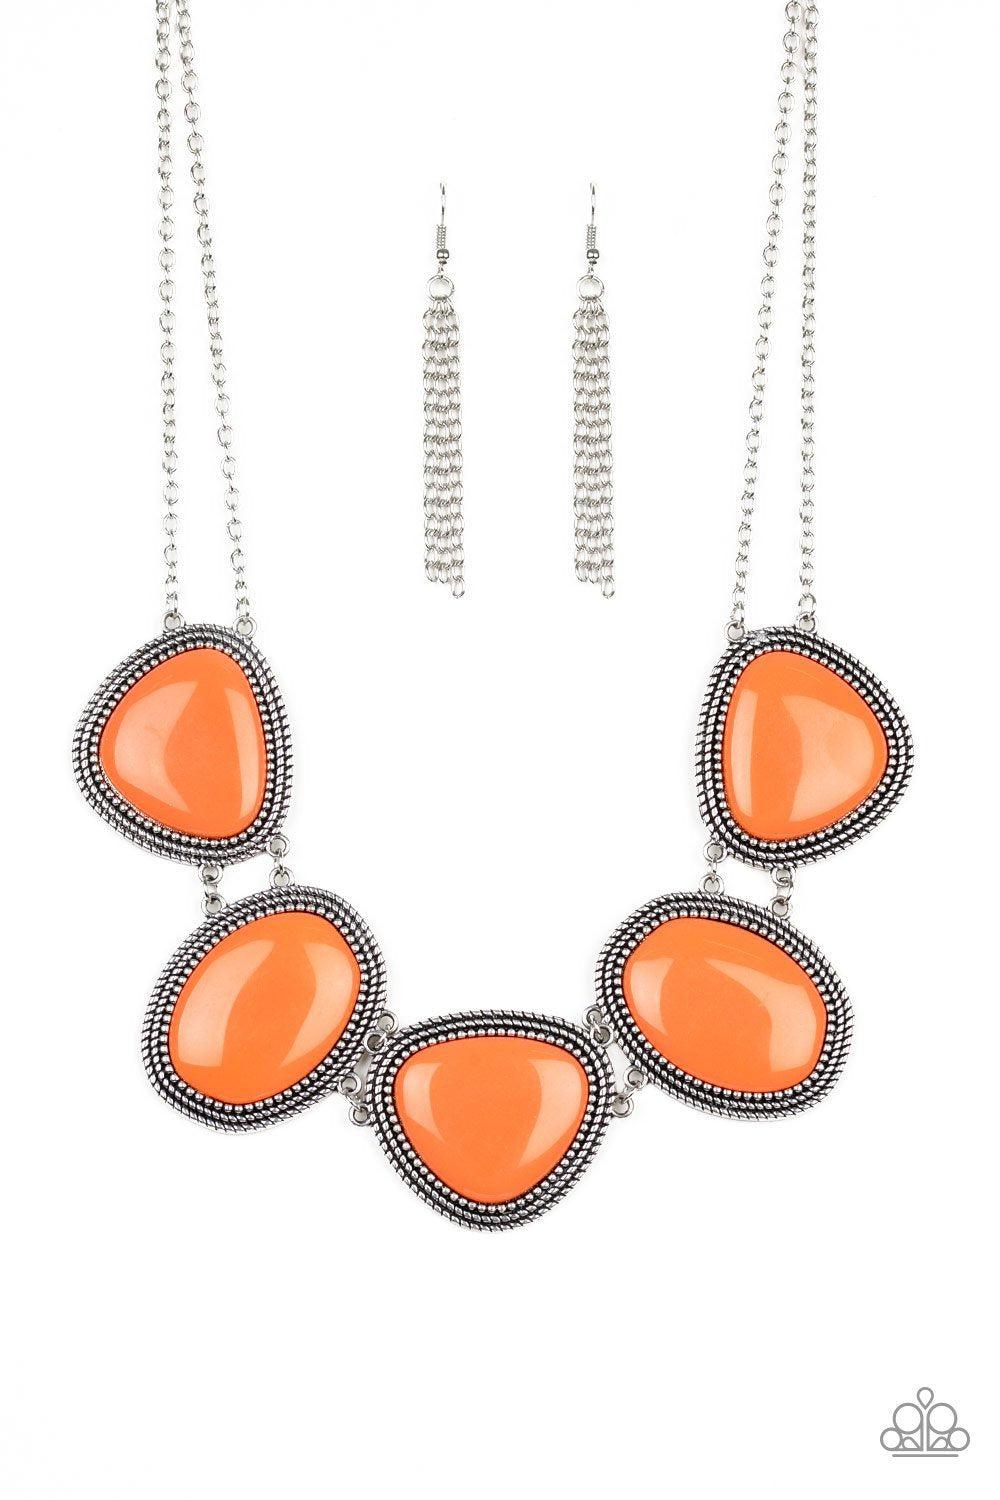 Viva La Vivid Orange Necklace - Paparazzi Accessories - lightbox -CarasShop.com - $5 Jewelry by Cara Jewels